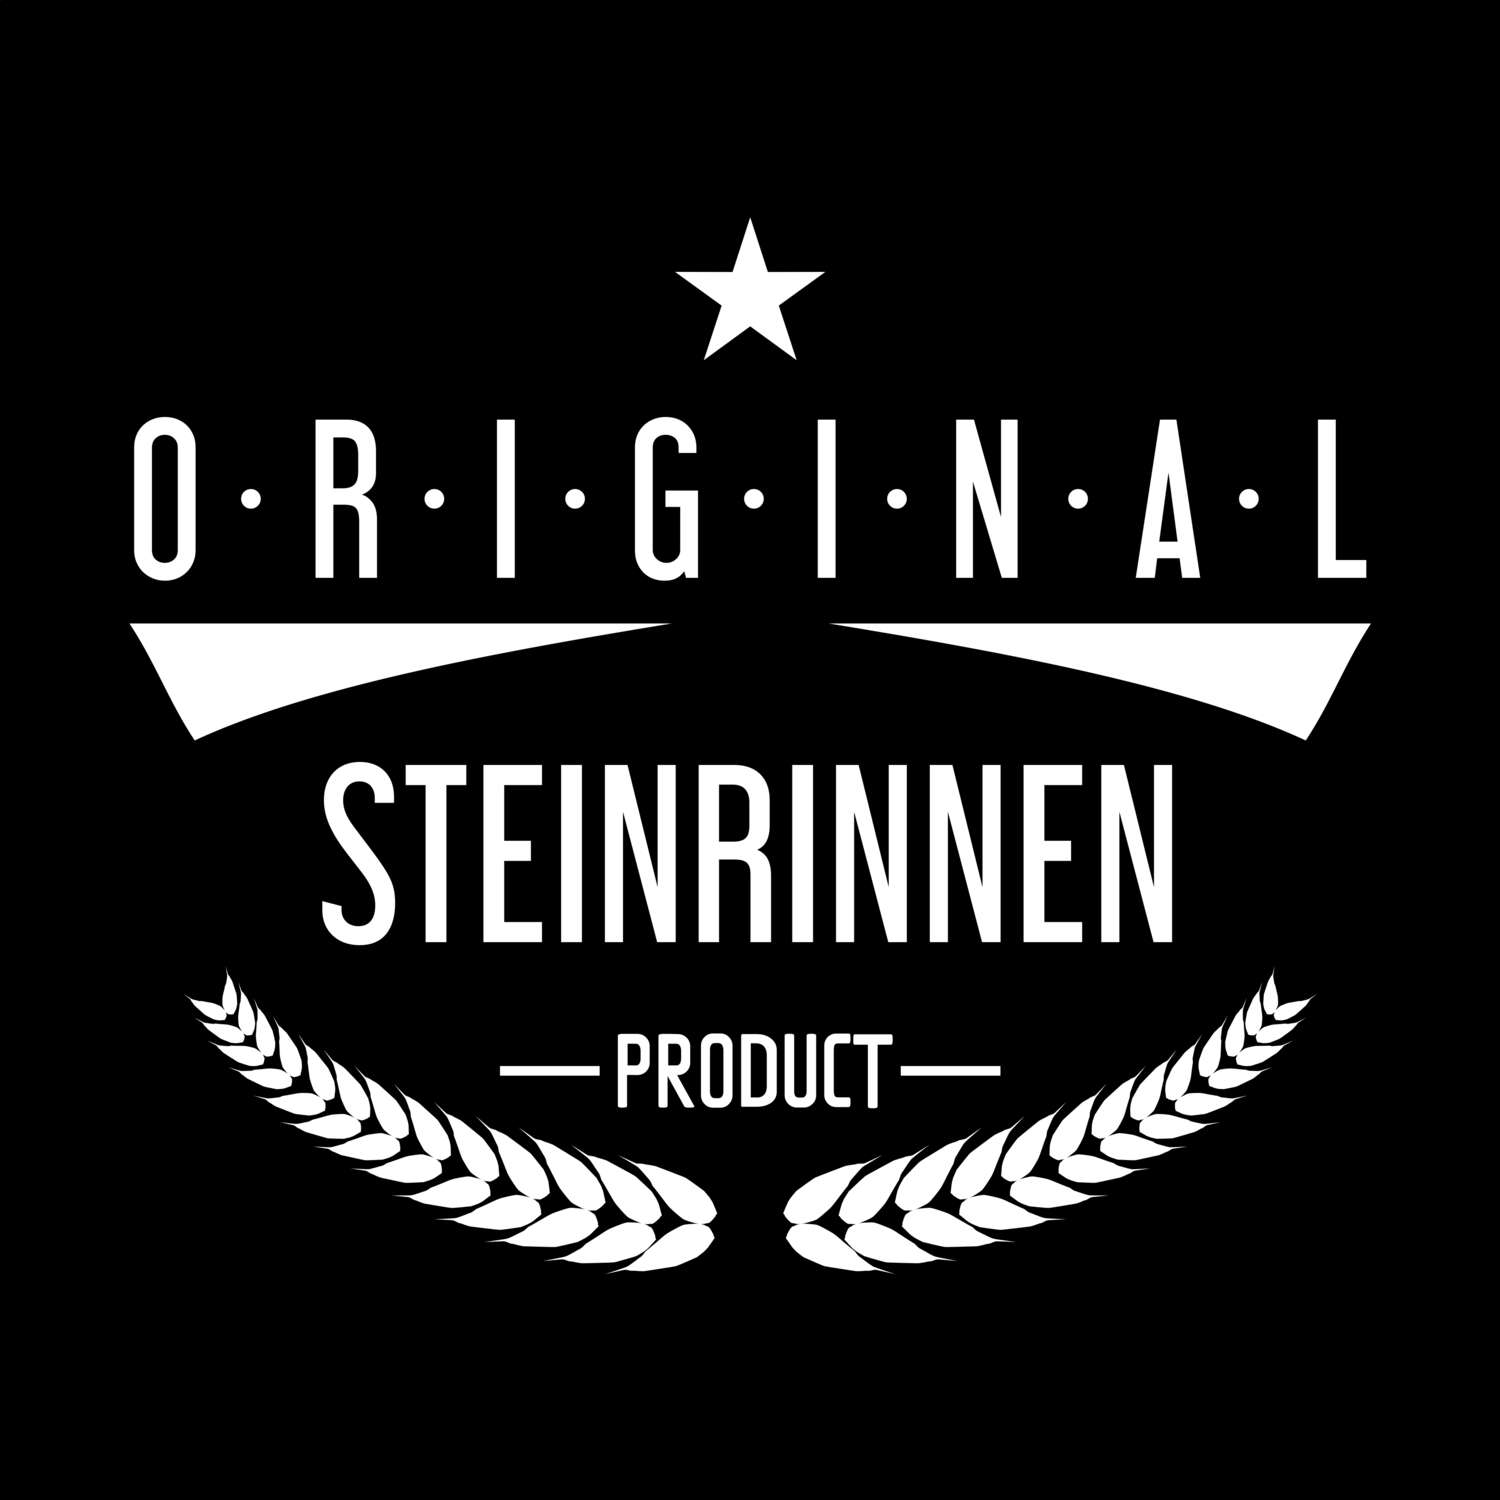 Steinrinnen T-Shirt »Original Product«